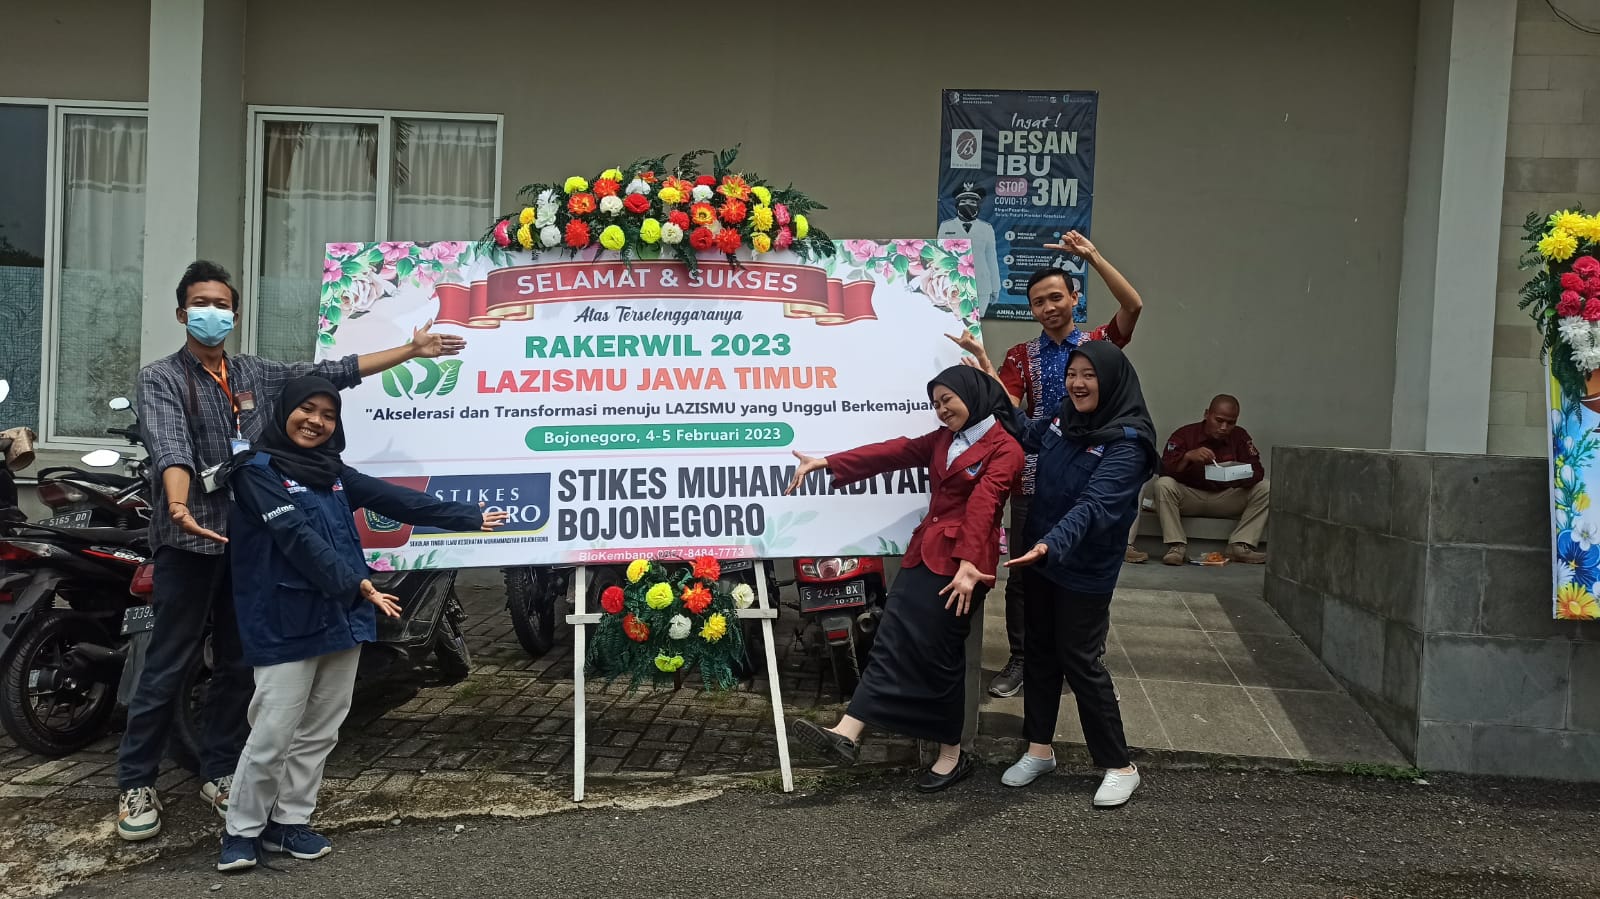 Stikes Maboro ikut serta dalam mensukseskan Rakerwil Lazismu Jawa Timur di Bojonegoro